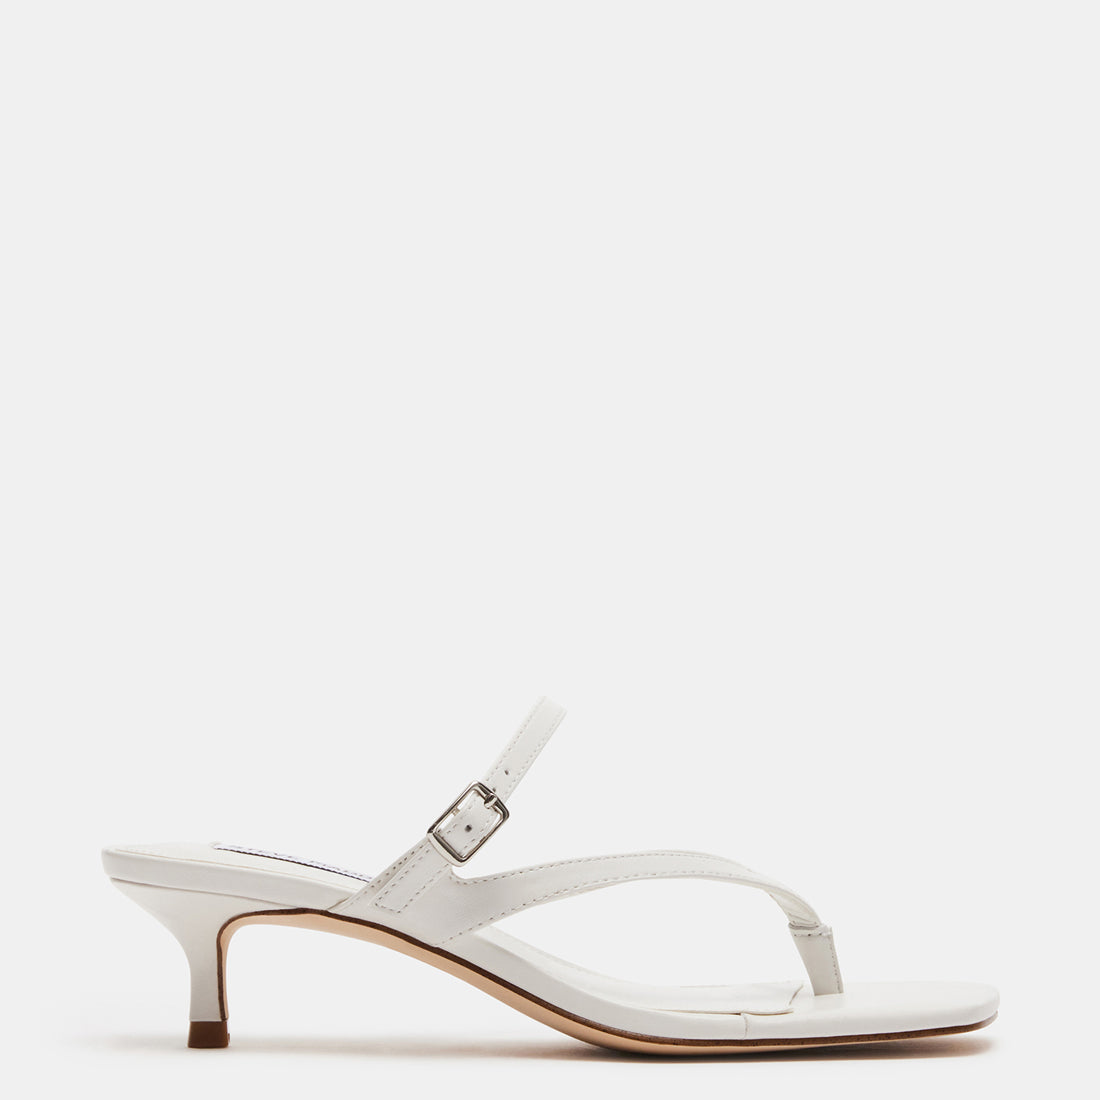 Zara | Shoes | White Square Toe Zara Strappy Heels 39 85 Euc | Poshmark